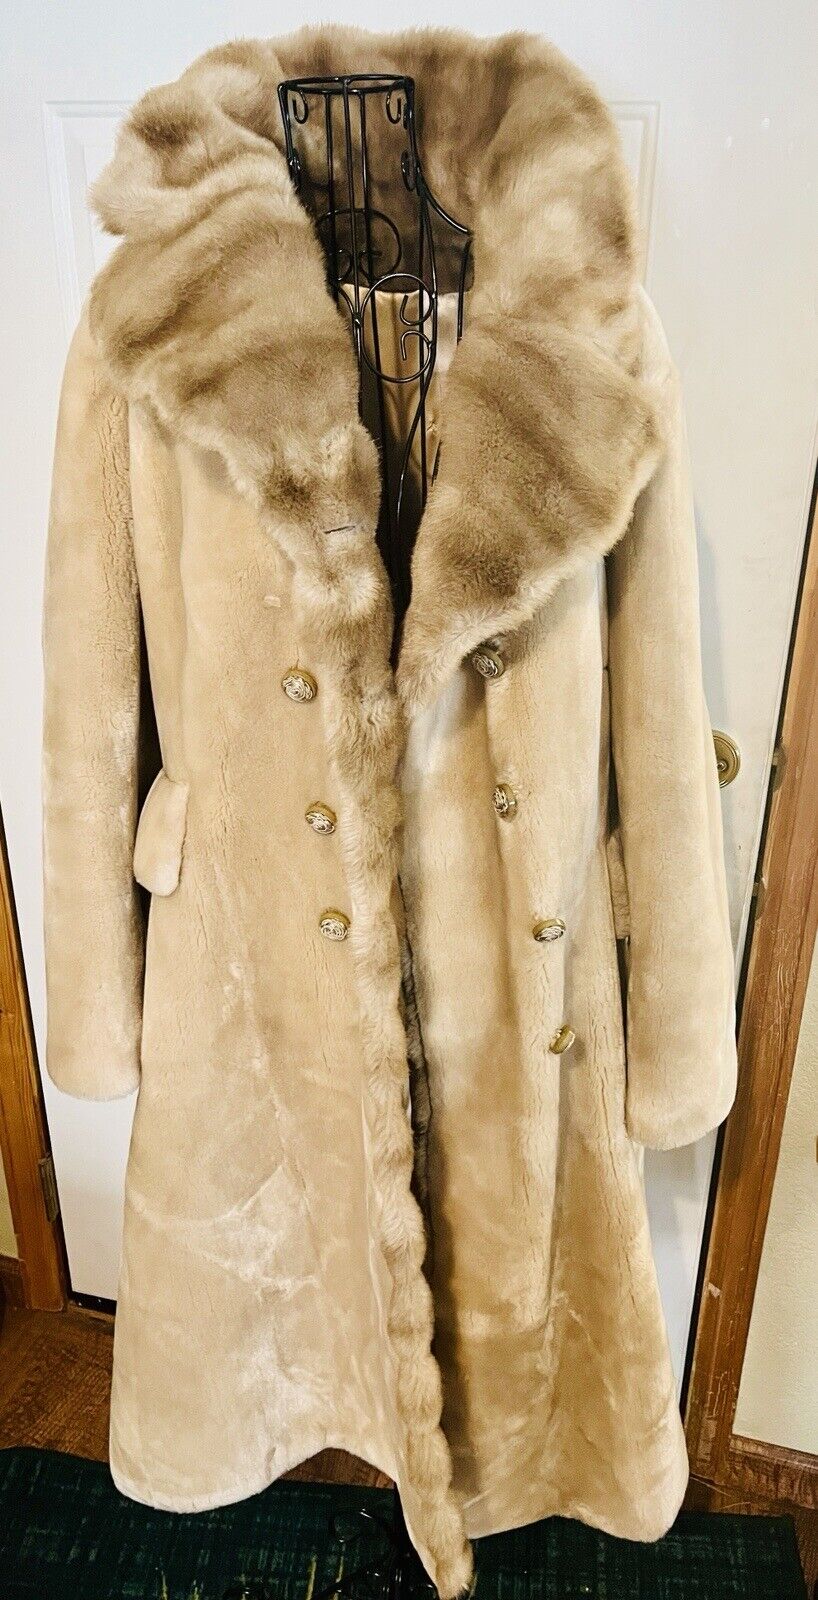 Vintage Borgana Sportowne Fox Fur Coat Light Brown Fits Like a Medium 3/4 Length